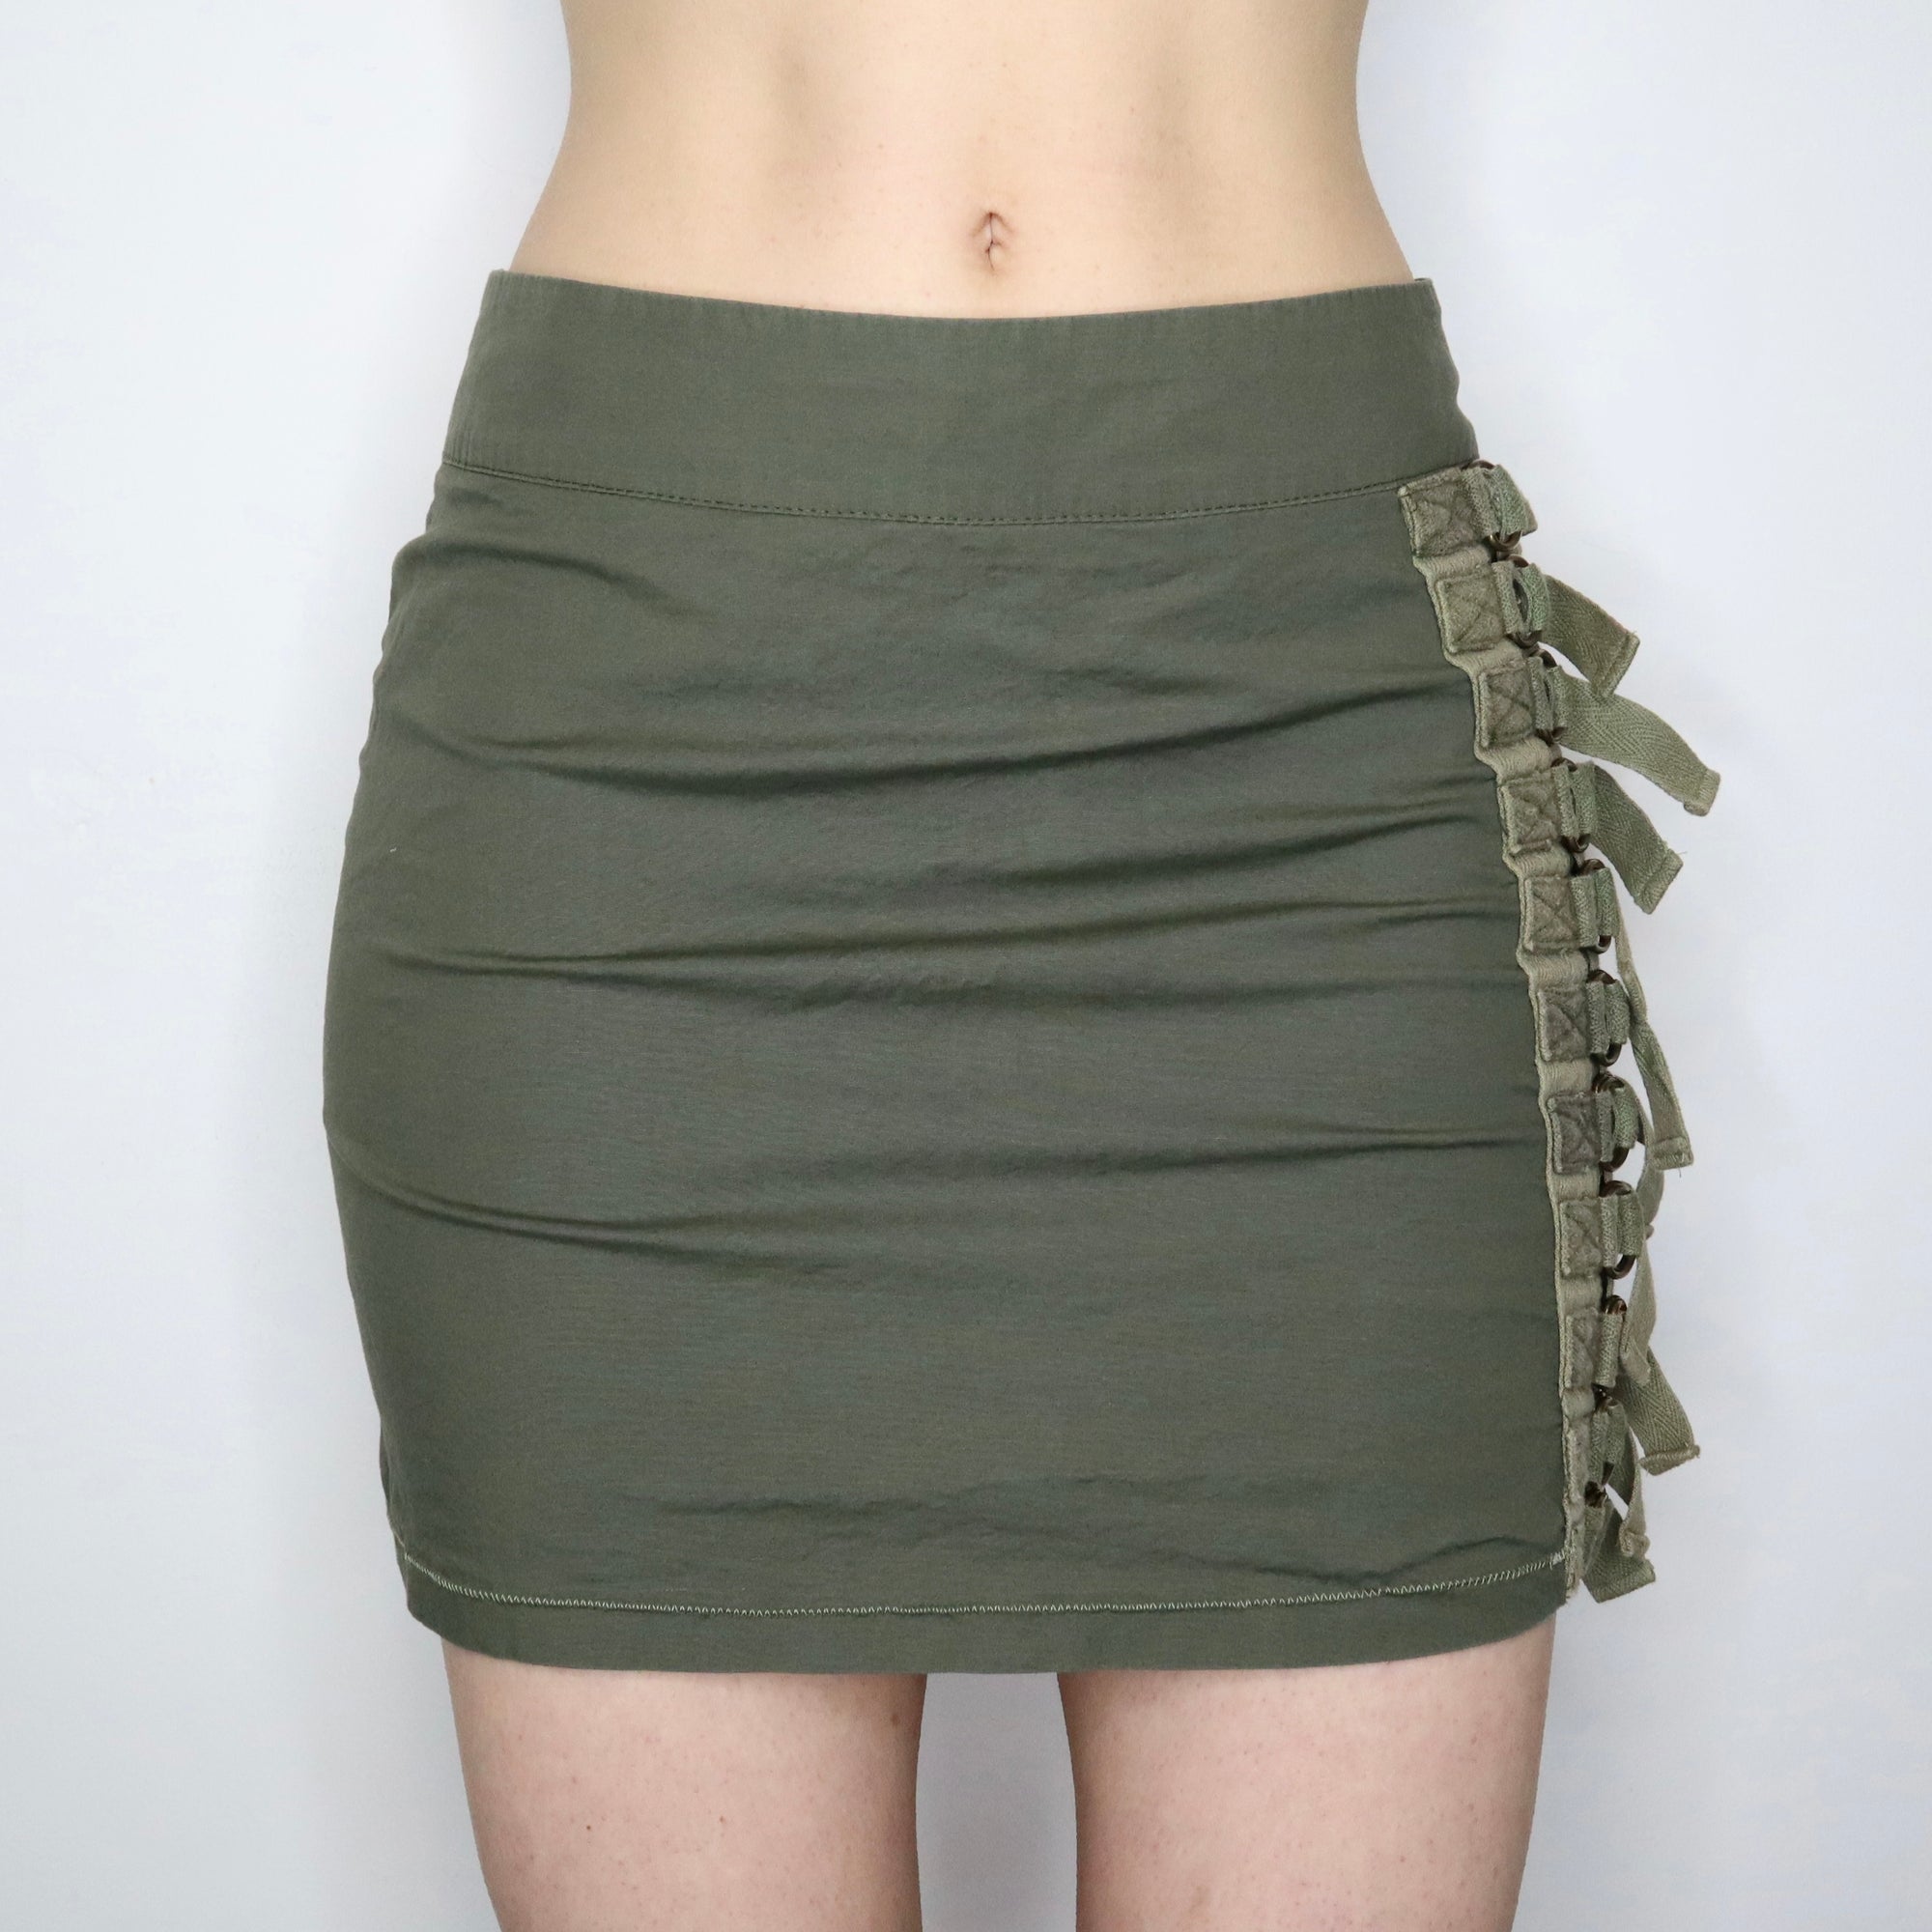 Grunge Green Mini Skirt (Medium)